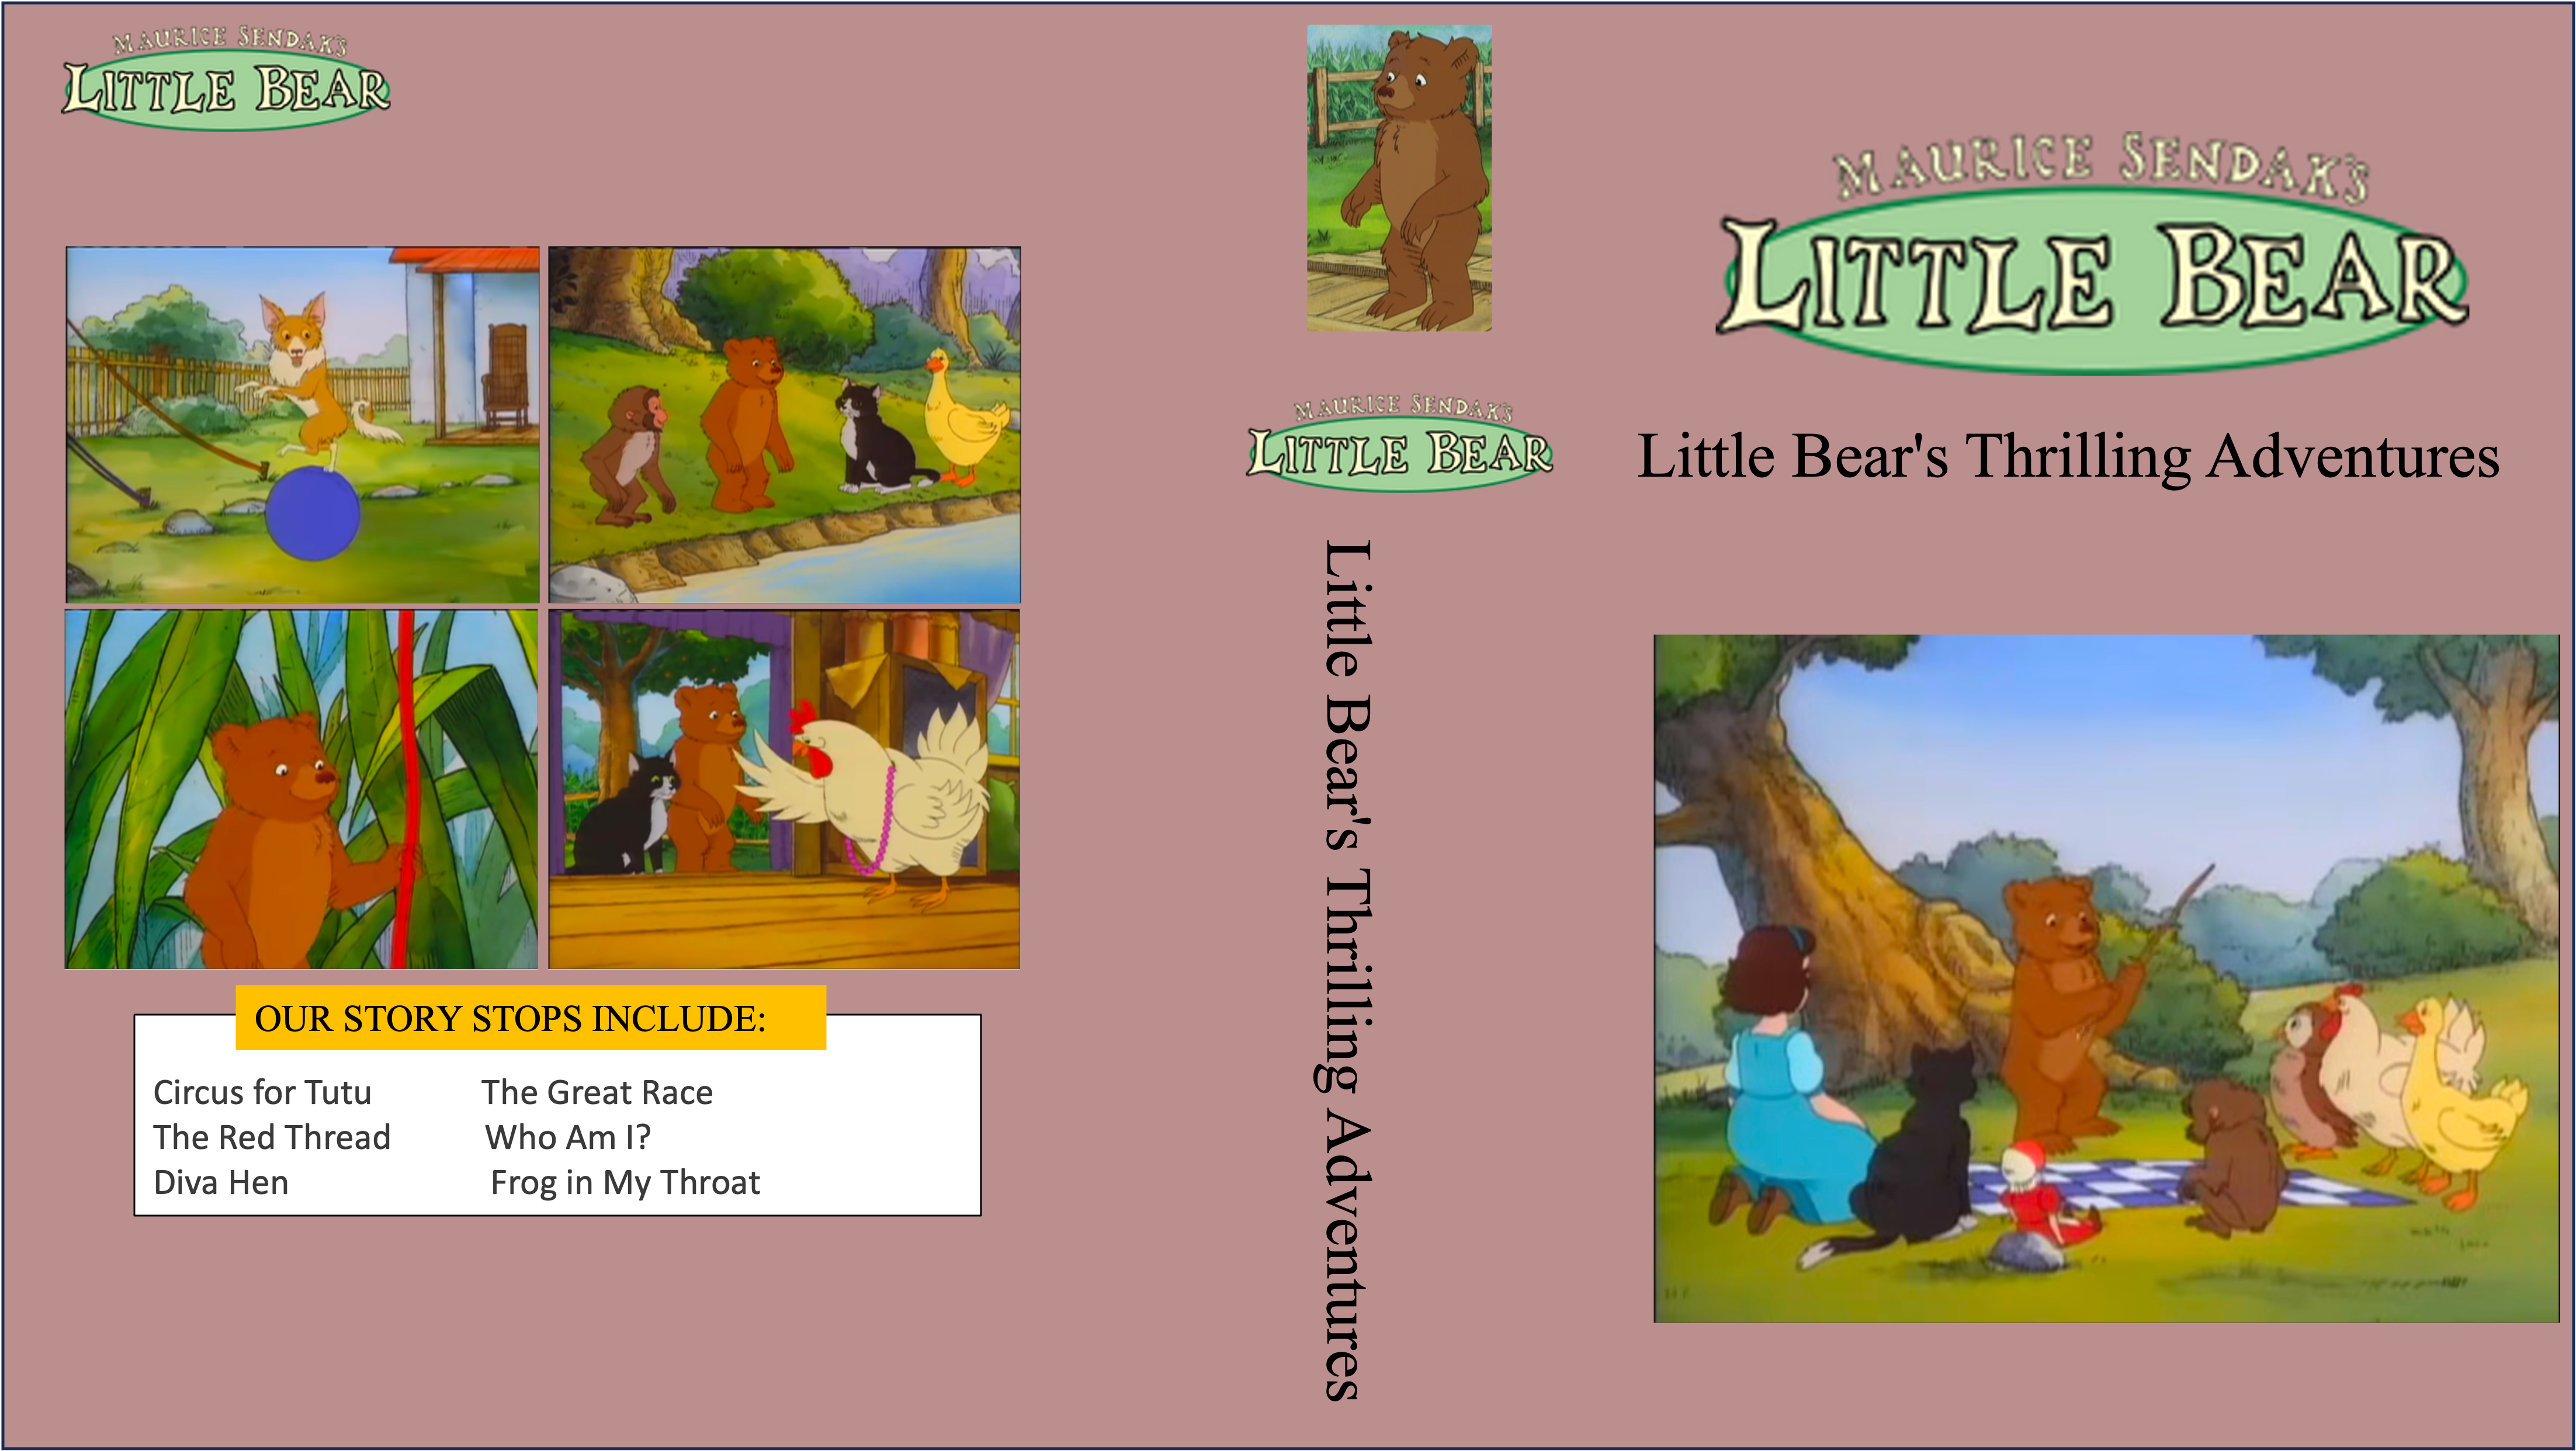 Little Bear (TV Series) by gikesmanners1995 on DeviantArt